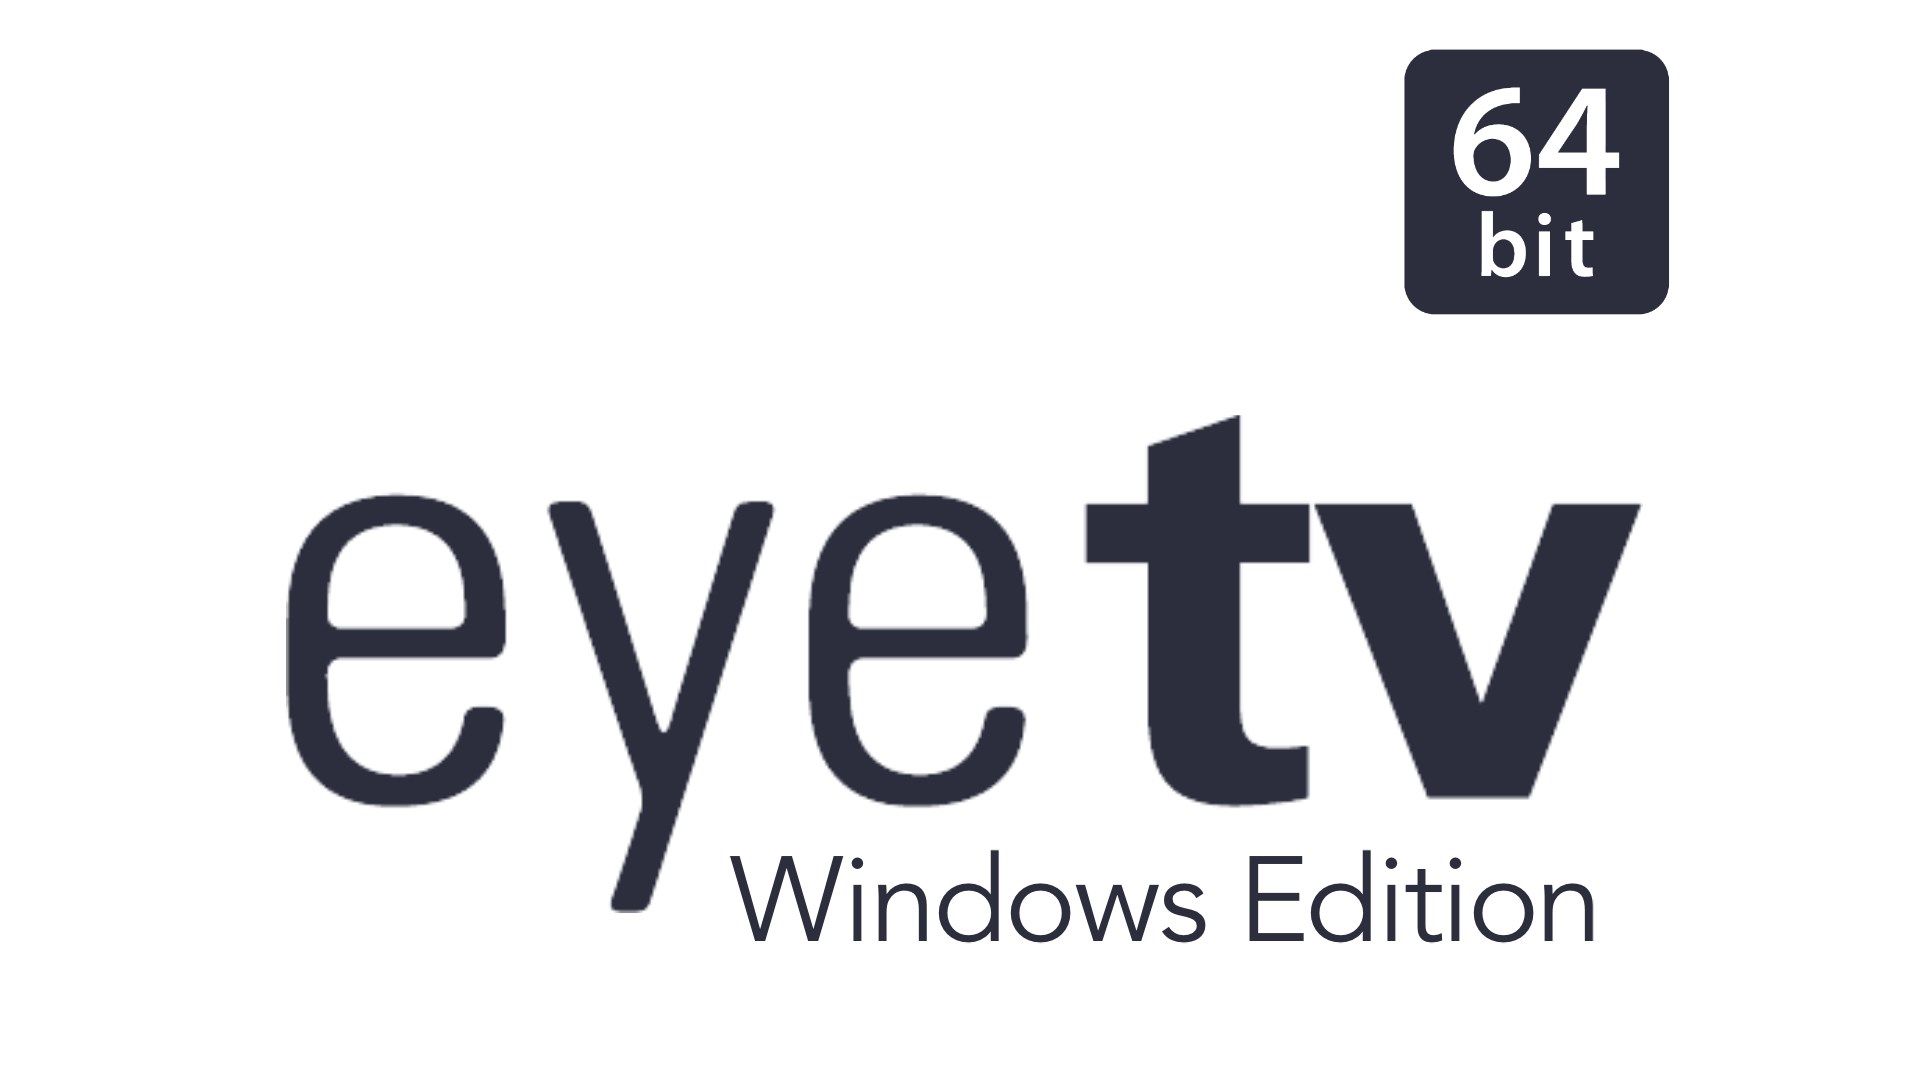 eyetv 64-bit